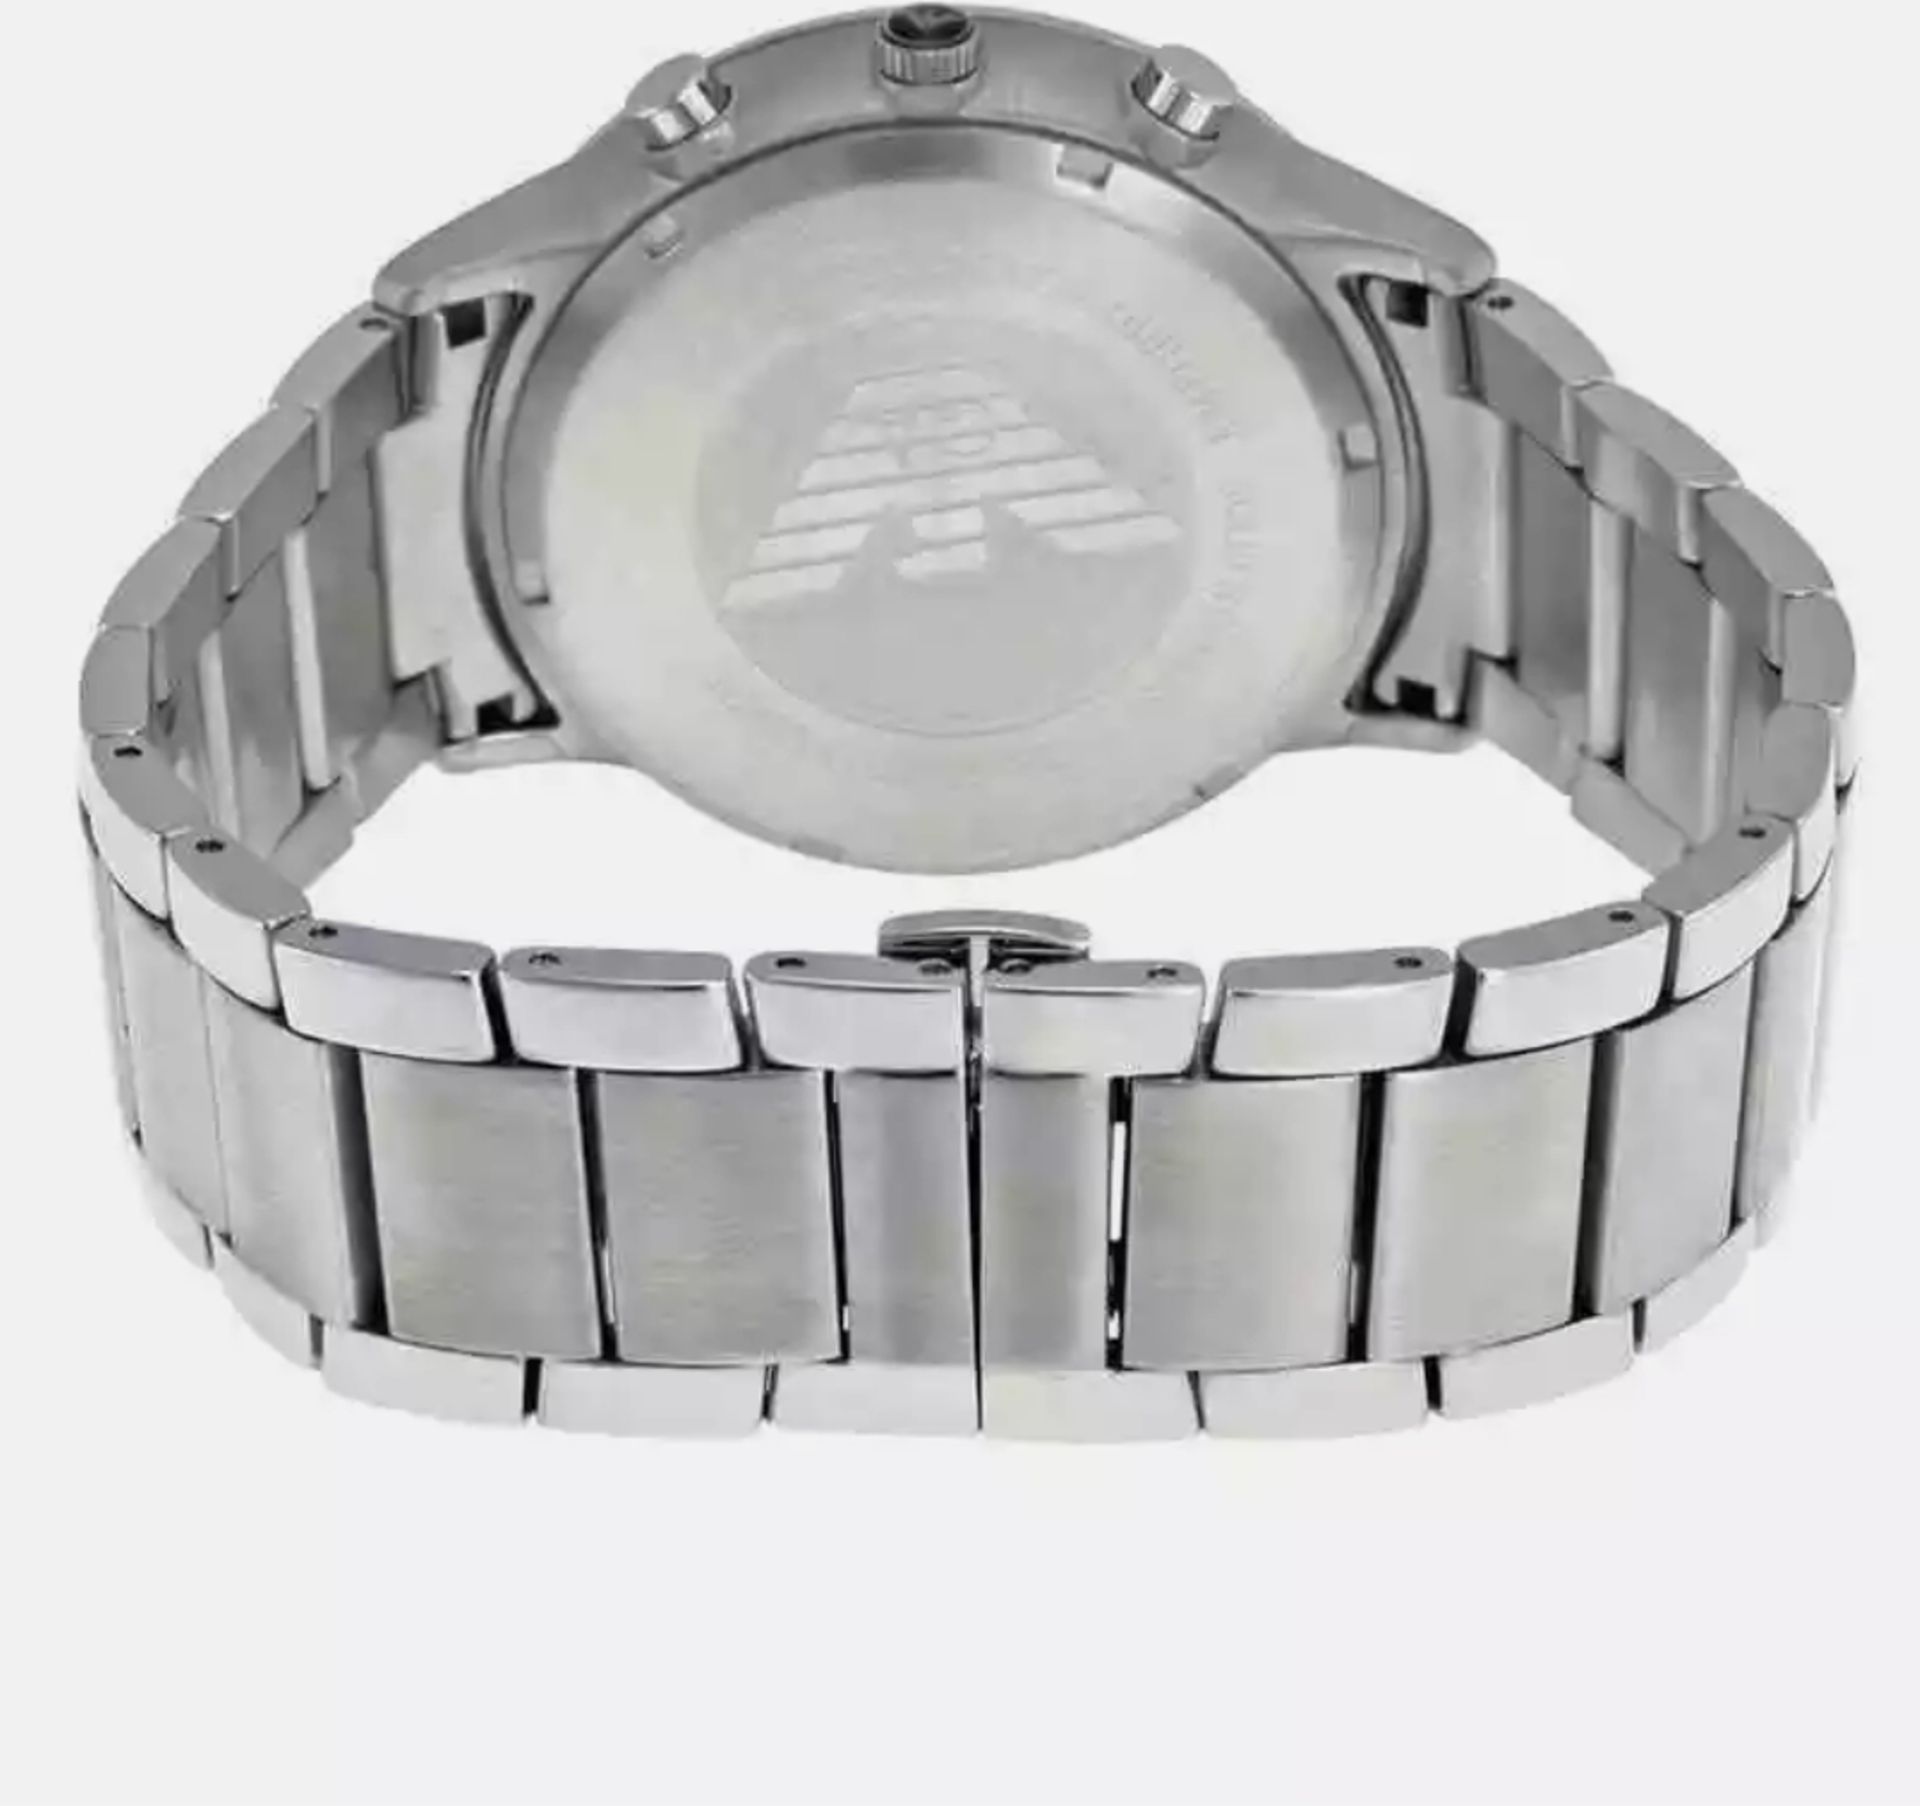 Emporio Armani AR2460 Men's Black Face Stainless Steel Bracelet Chronograph Watch - Image 4 of 8